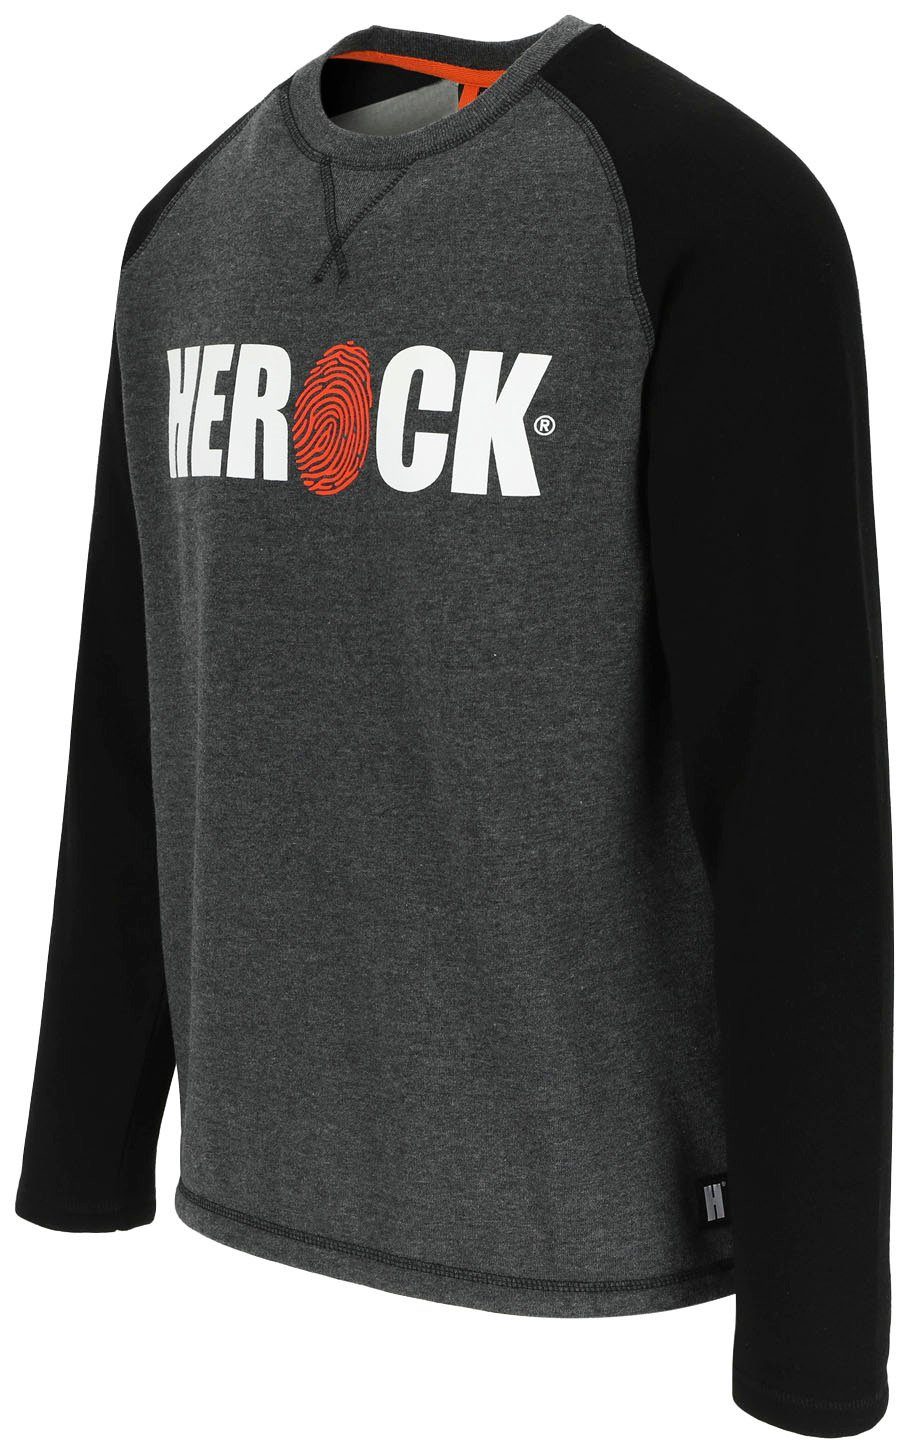 Herock Langarmshirt ROLES Sweater Schwarz/Grau T-Shirt/Sweater, 2-Farbig Aufdruck, Rundhals, Herock®- mit